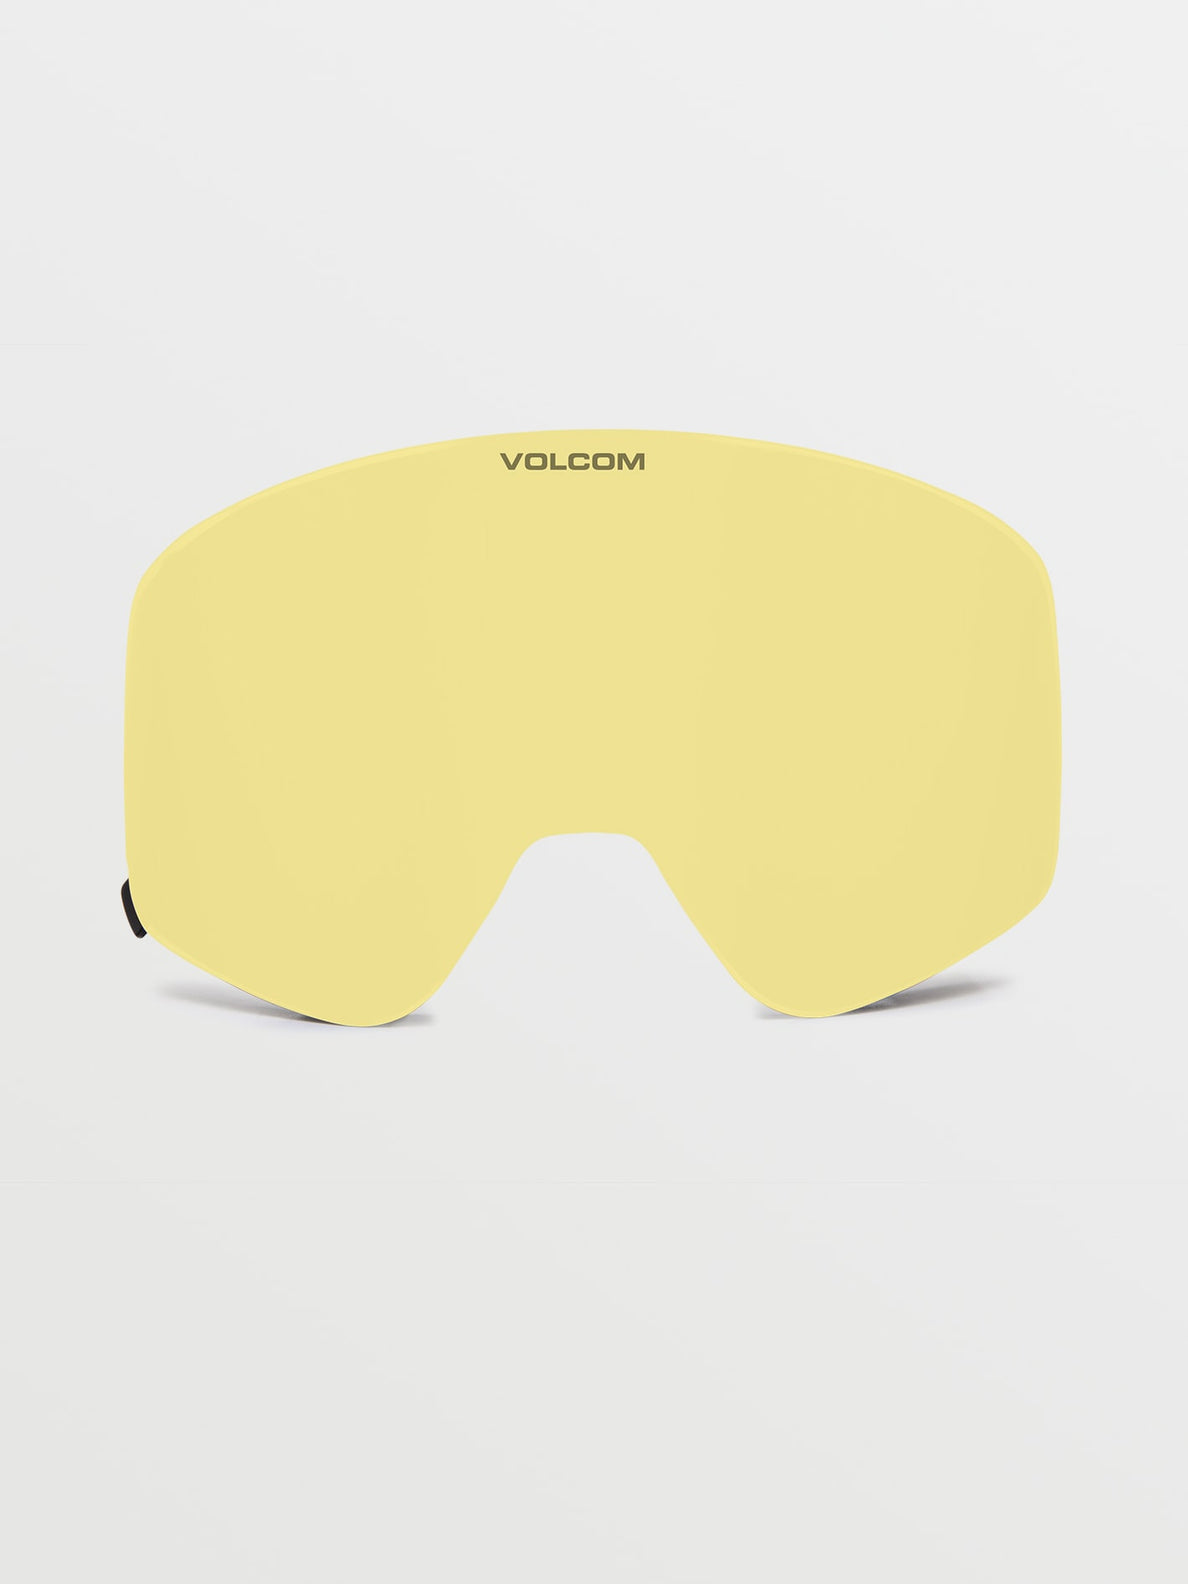 Odyssey Goggle with Bonus Lens - Slate Blue / Blue Chrome